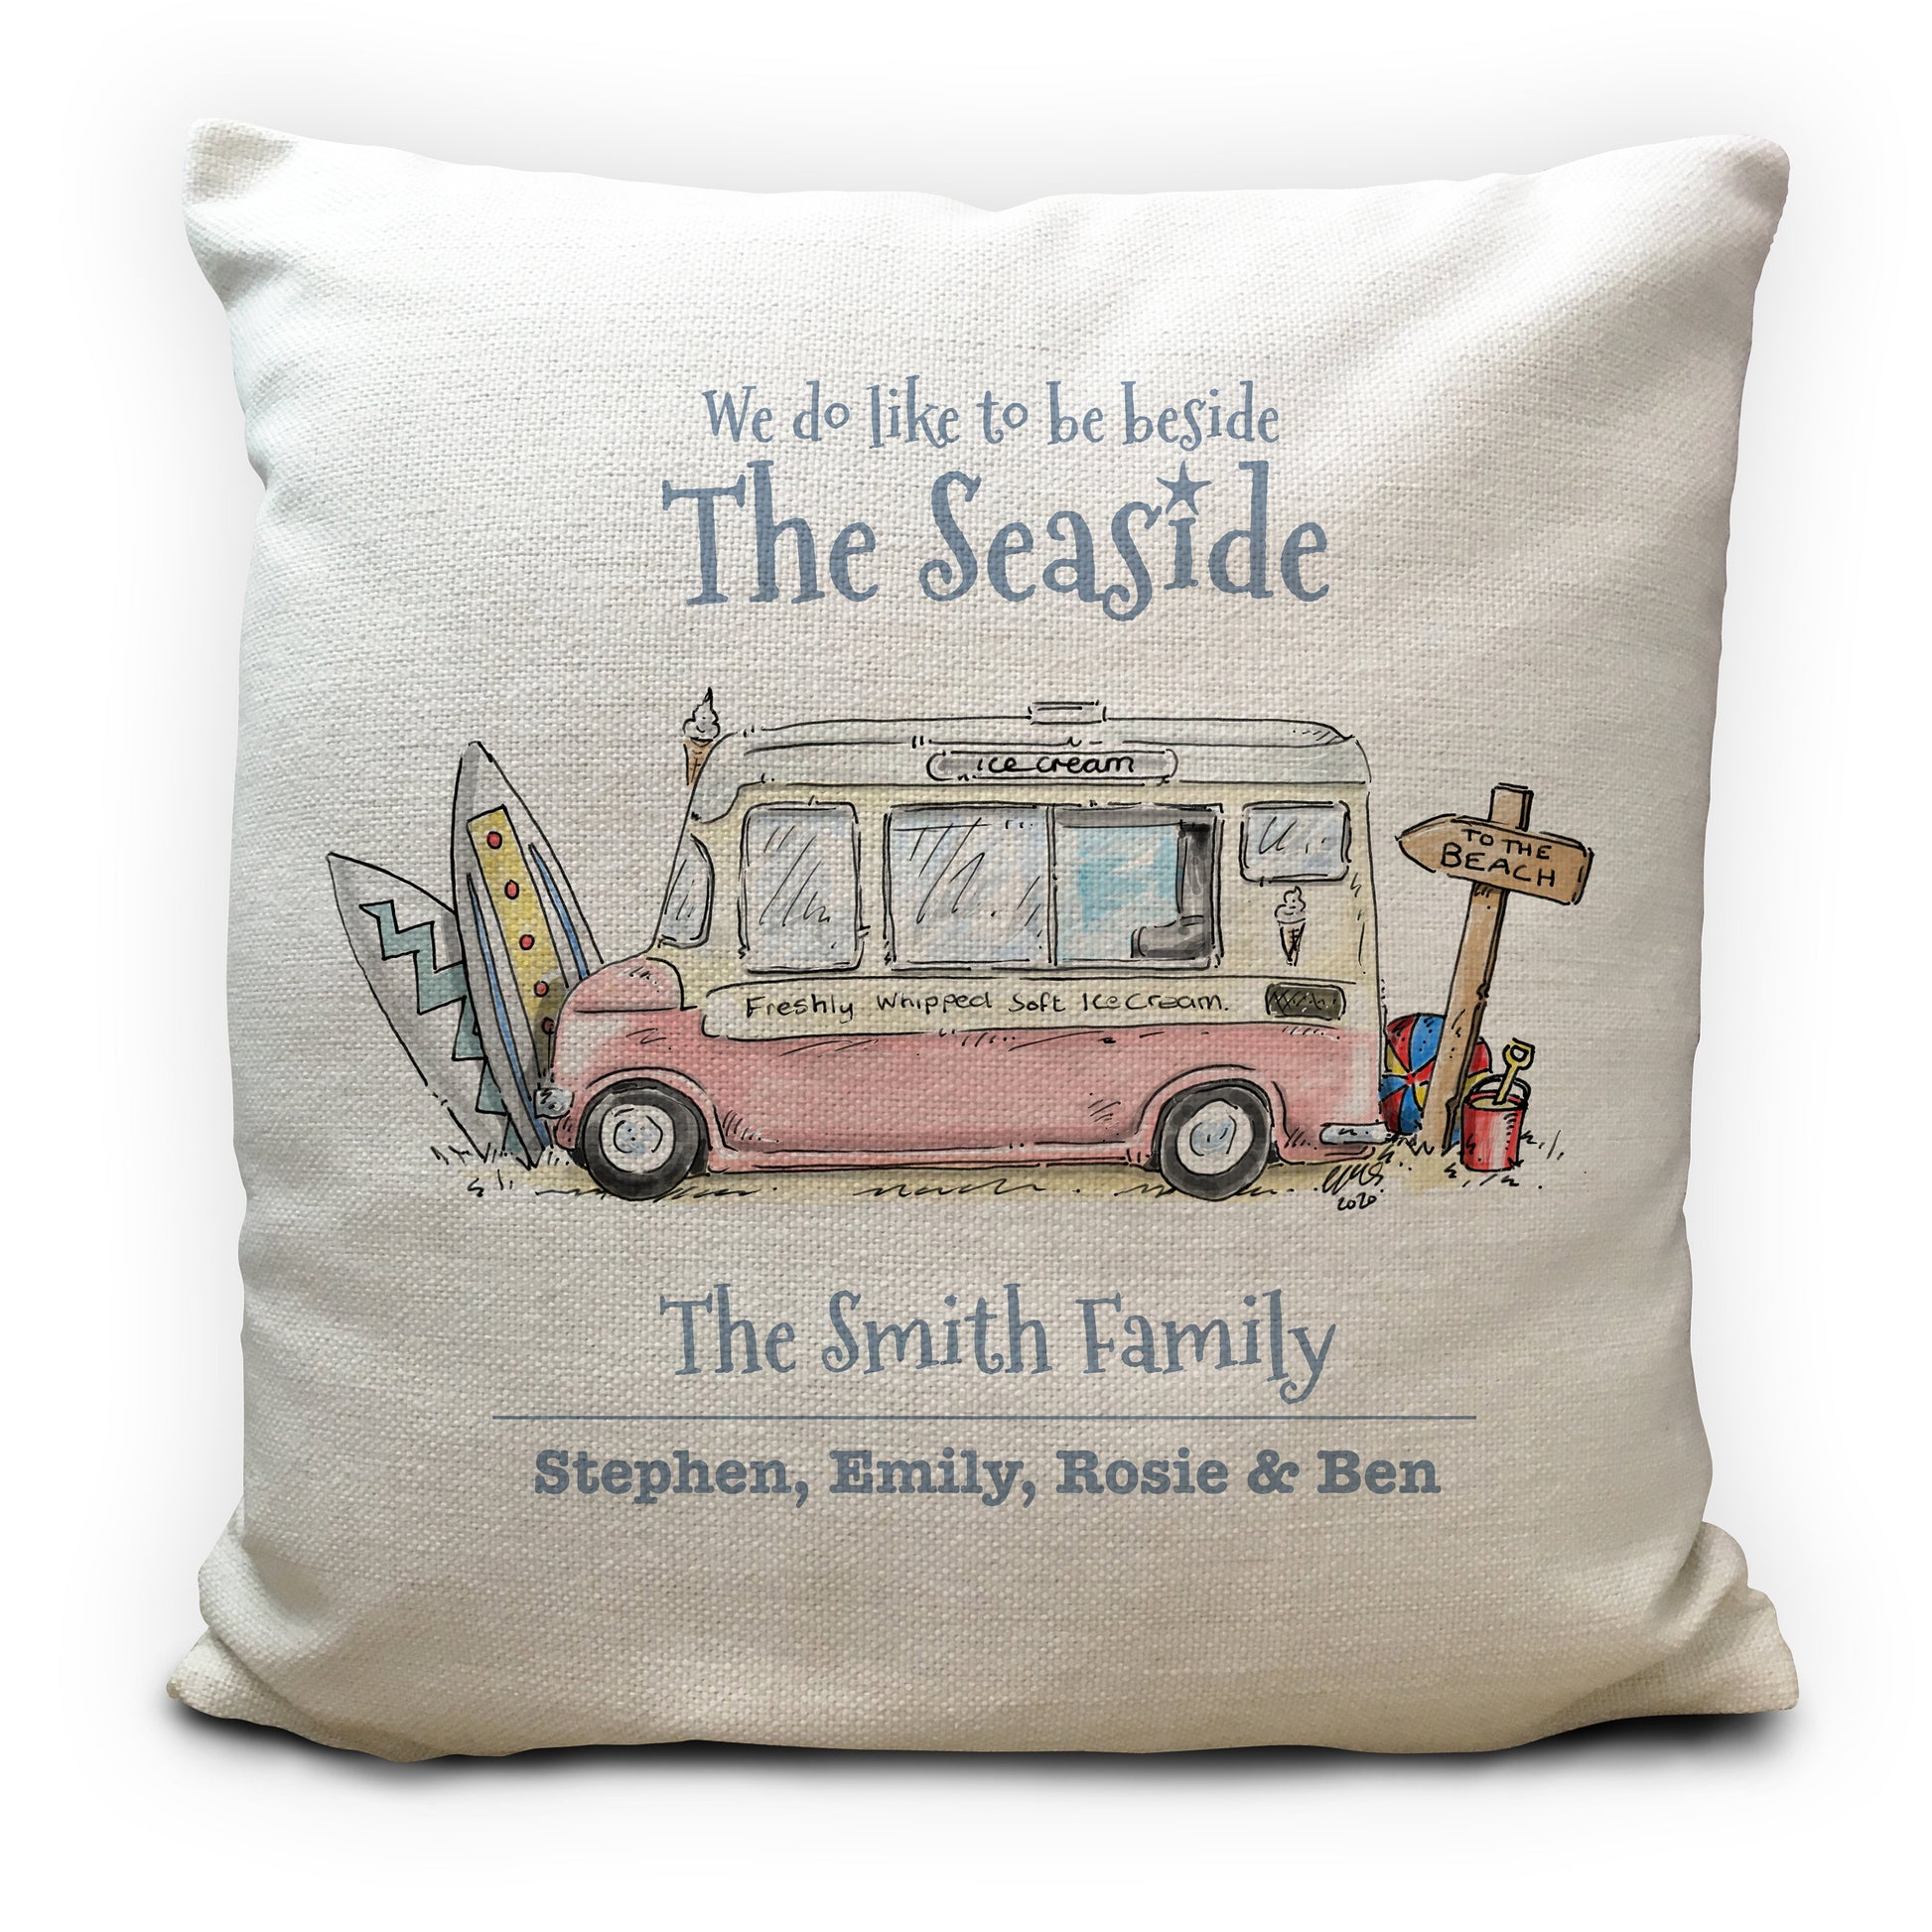 personalised custom seaside ice cream van cushion cover